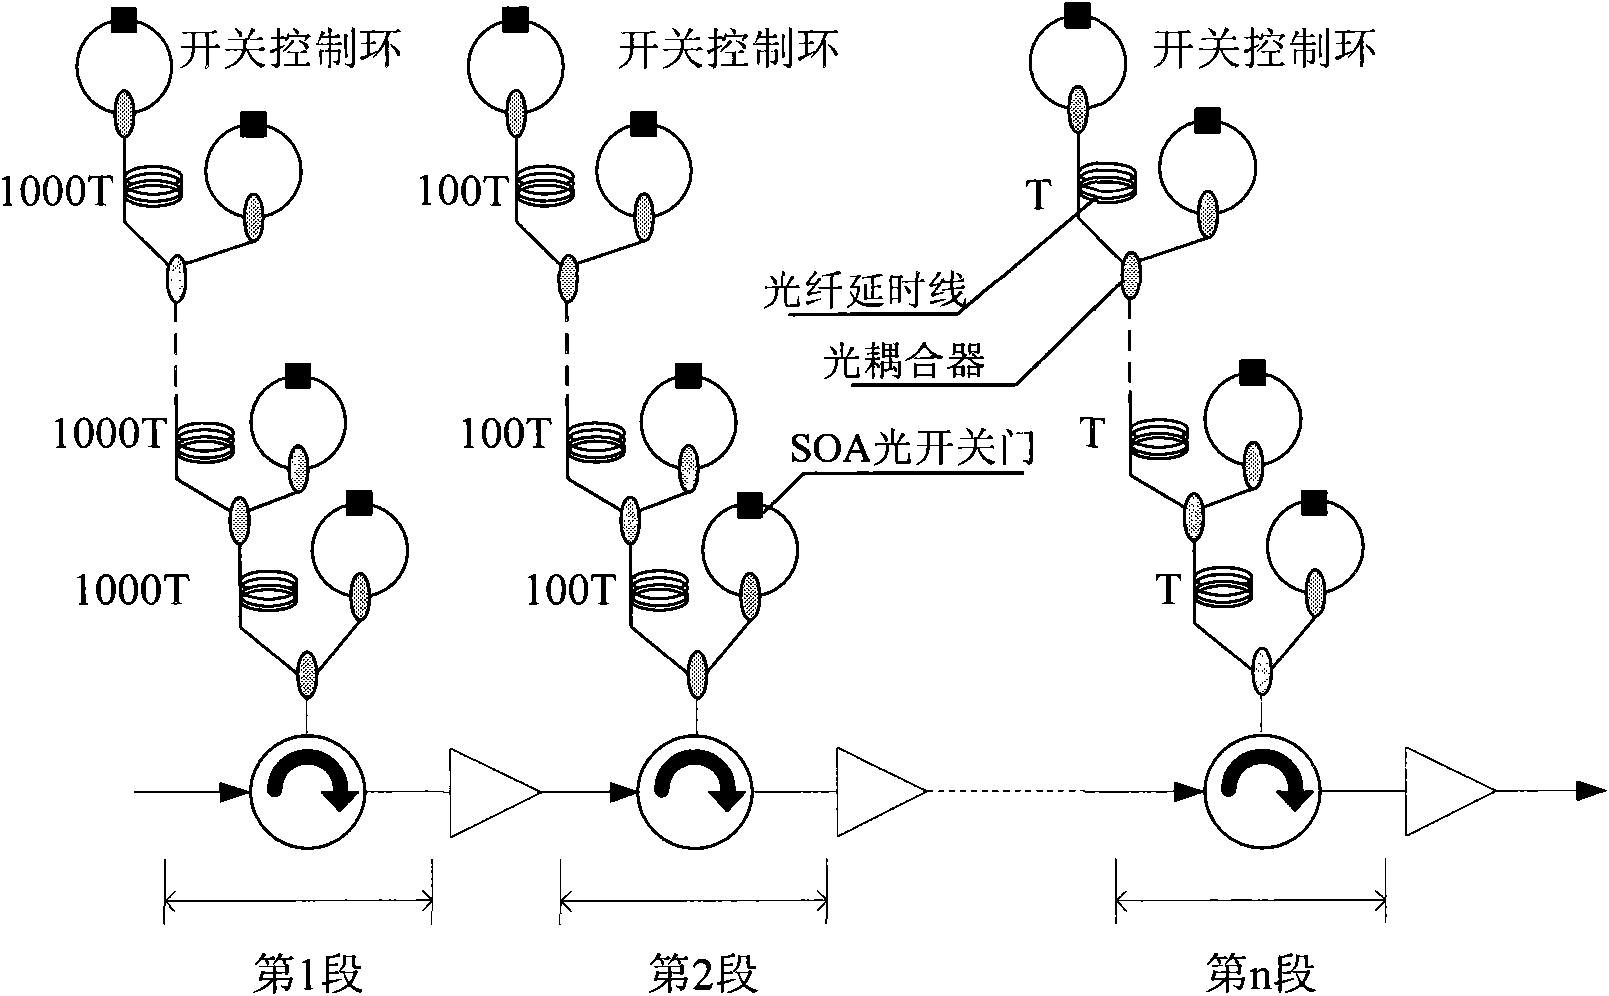 Tunable multi-loop multi-system optical buffer based on N*N optical switch matrix